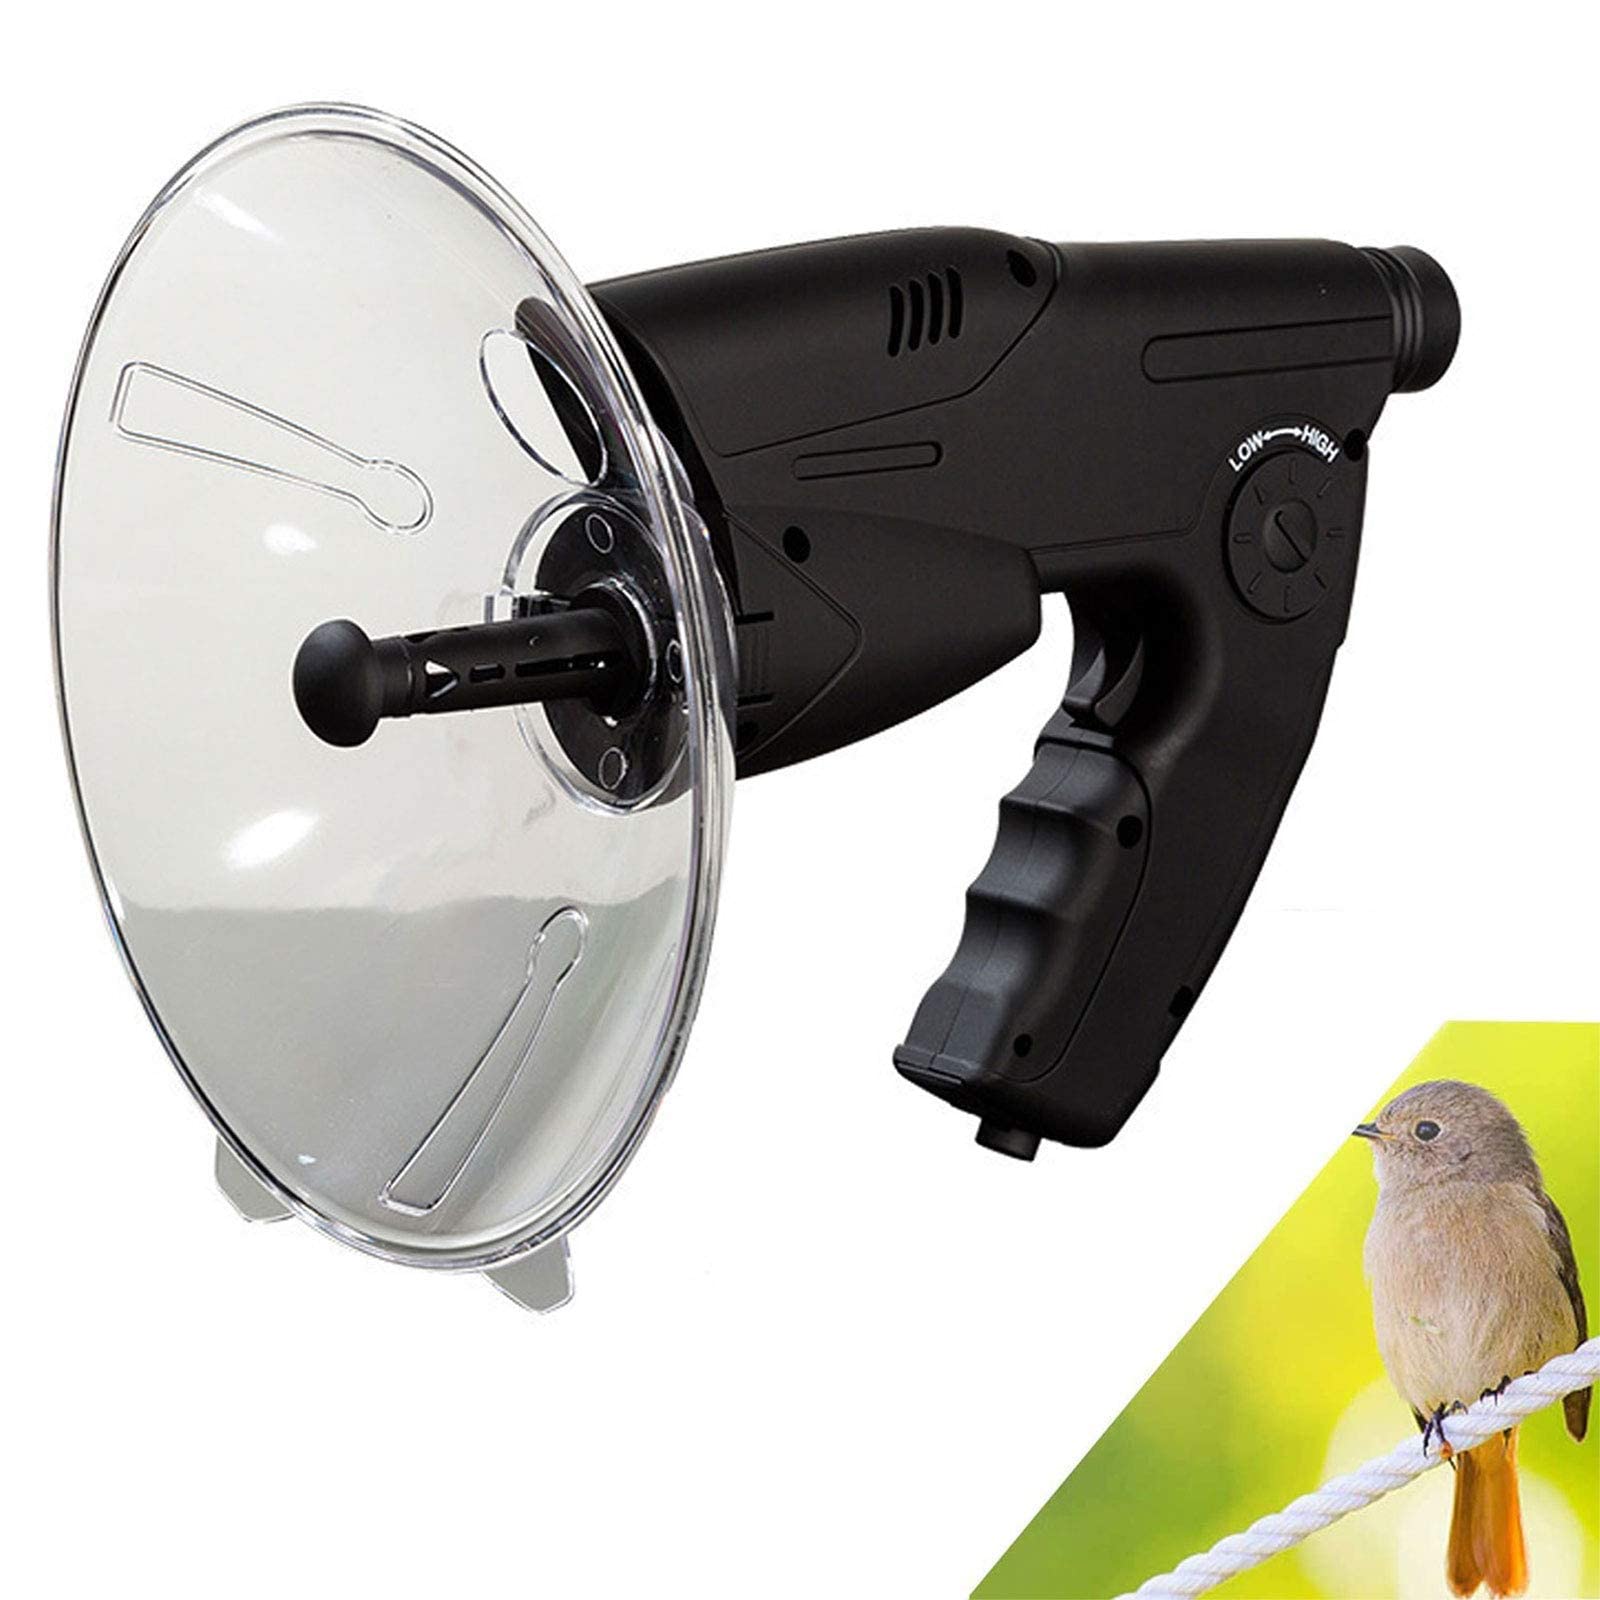 Tragbares Parabolmikrofon-Monokular, Bionic Ear Long Range Birds Listening Telescope 100M, digitales Gerät zur Naturbeobachtung und zum Lauschen für Aktivitäten im Freien